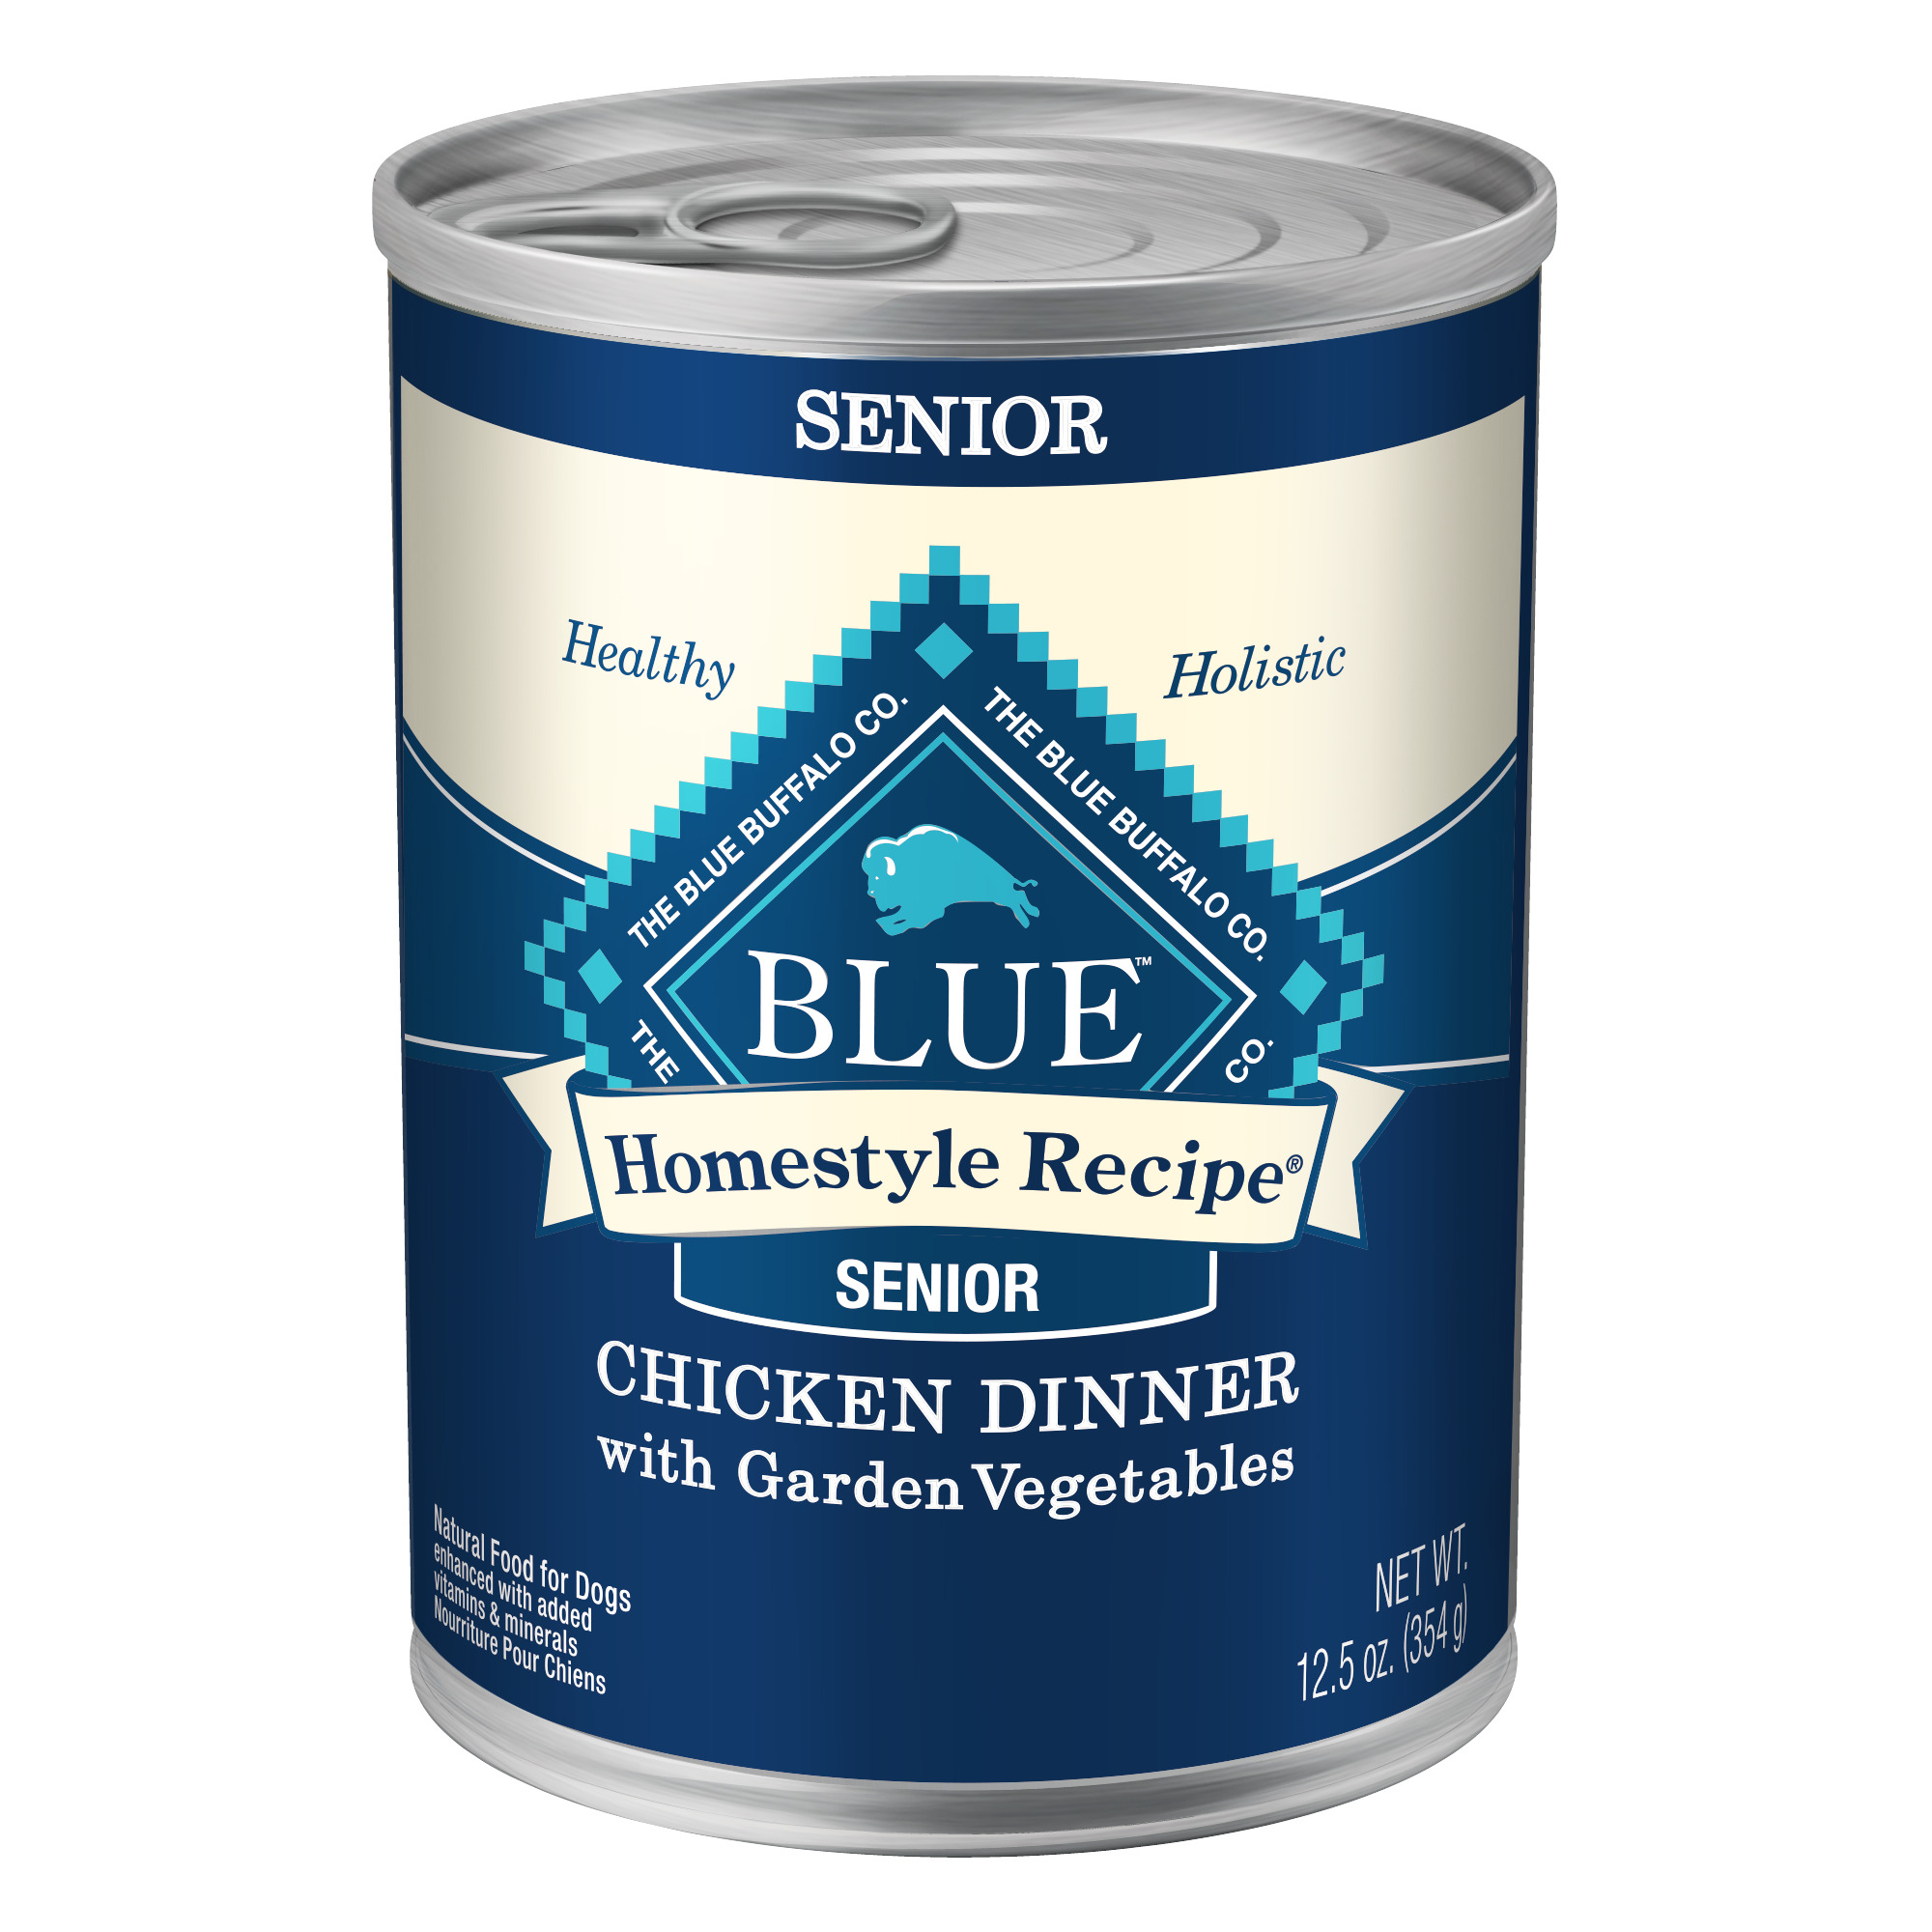 BLUE Homestyle Recipe Chicken Dinner with Garden Vegetables For Senior Dogs,